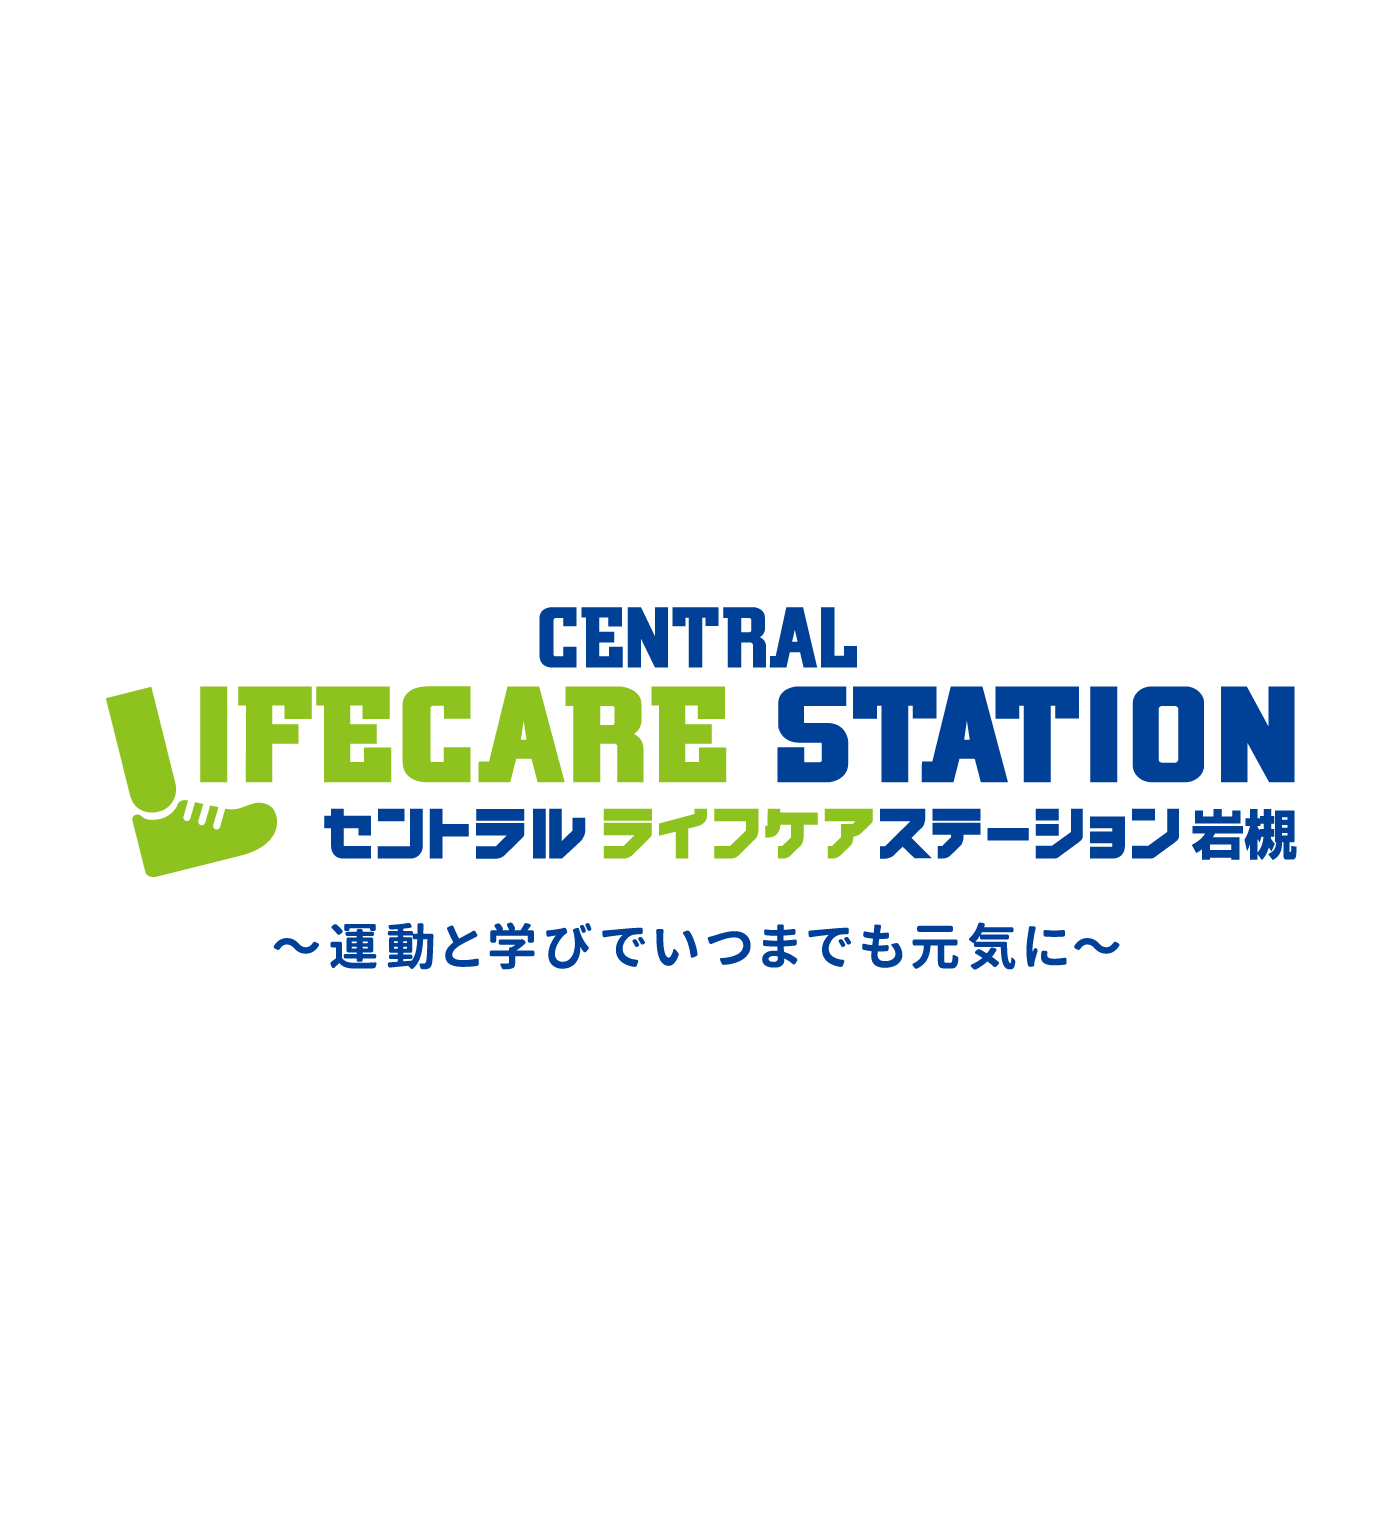 Central Life Care Station Iwatsuki